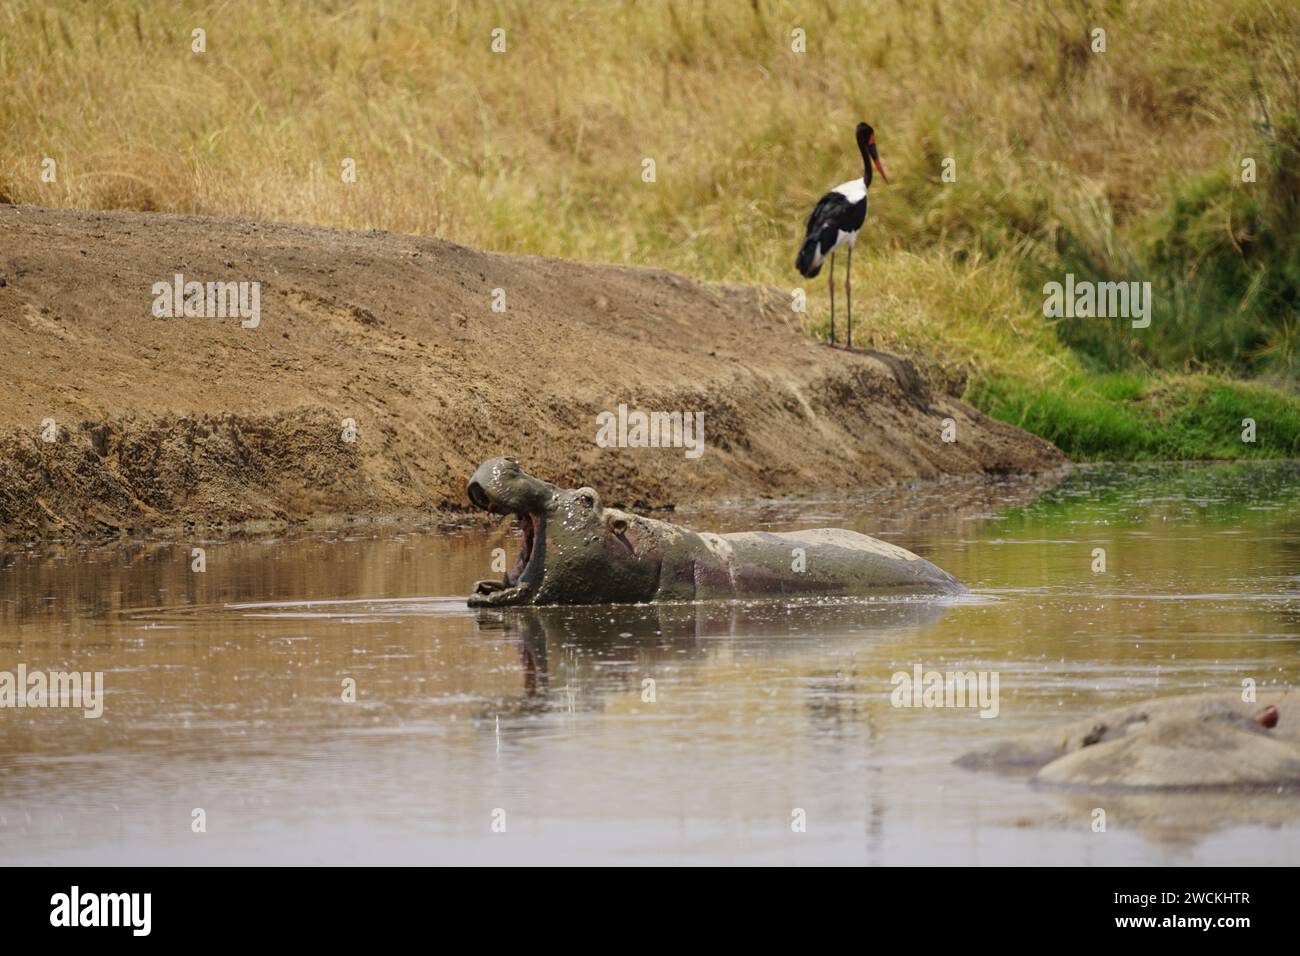 hippo in pond, african wilderness, water, grass, stork Stock Photo